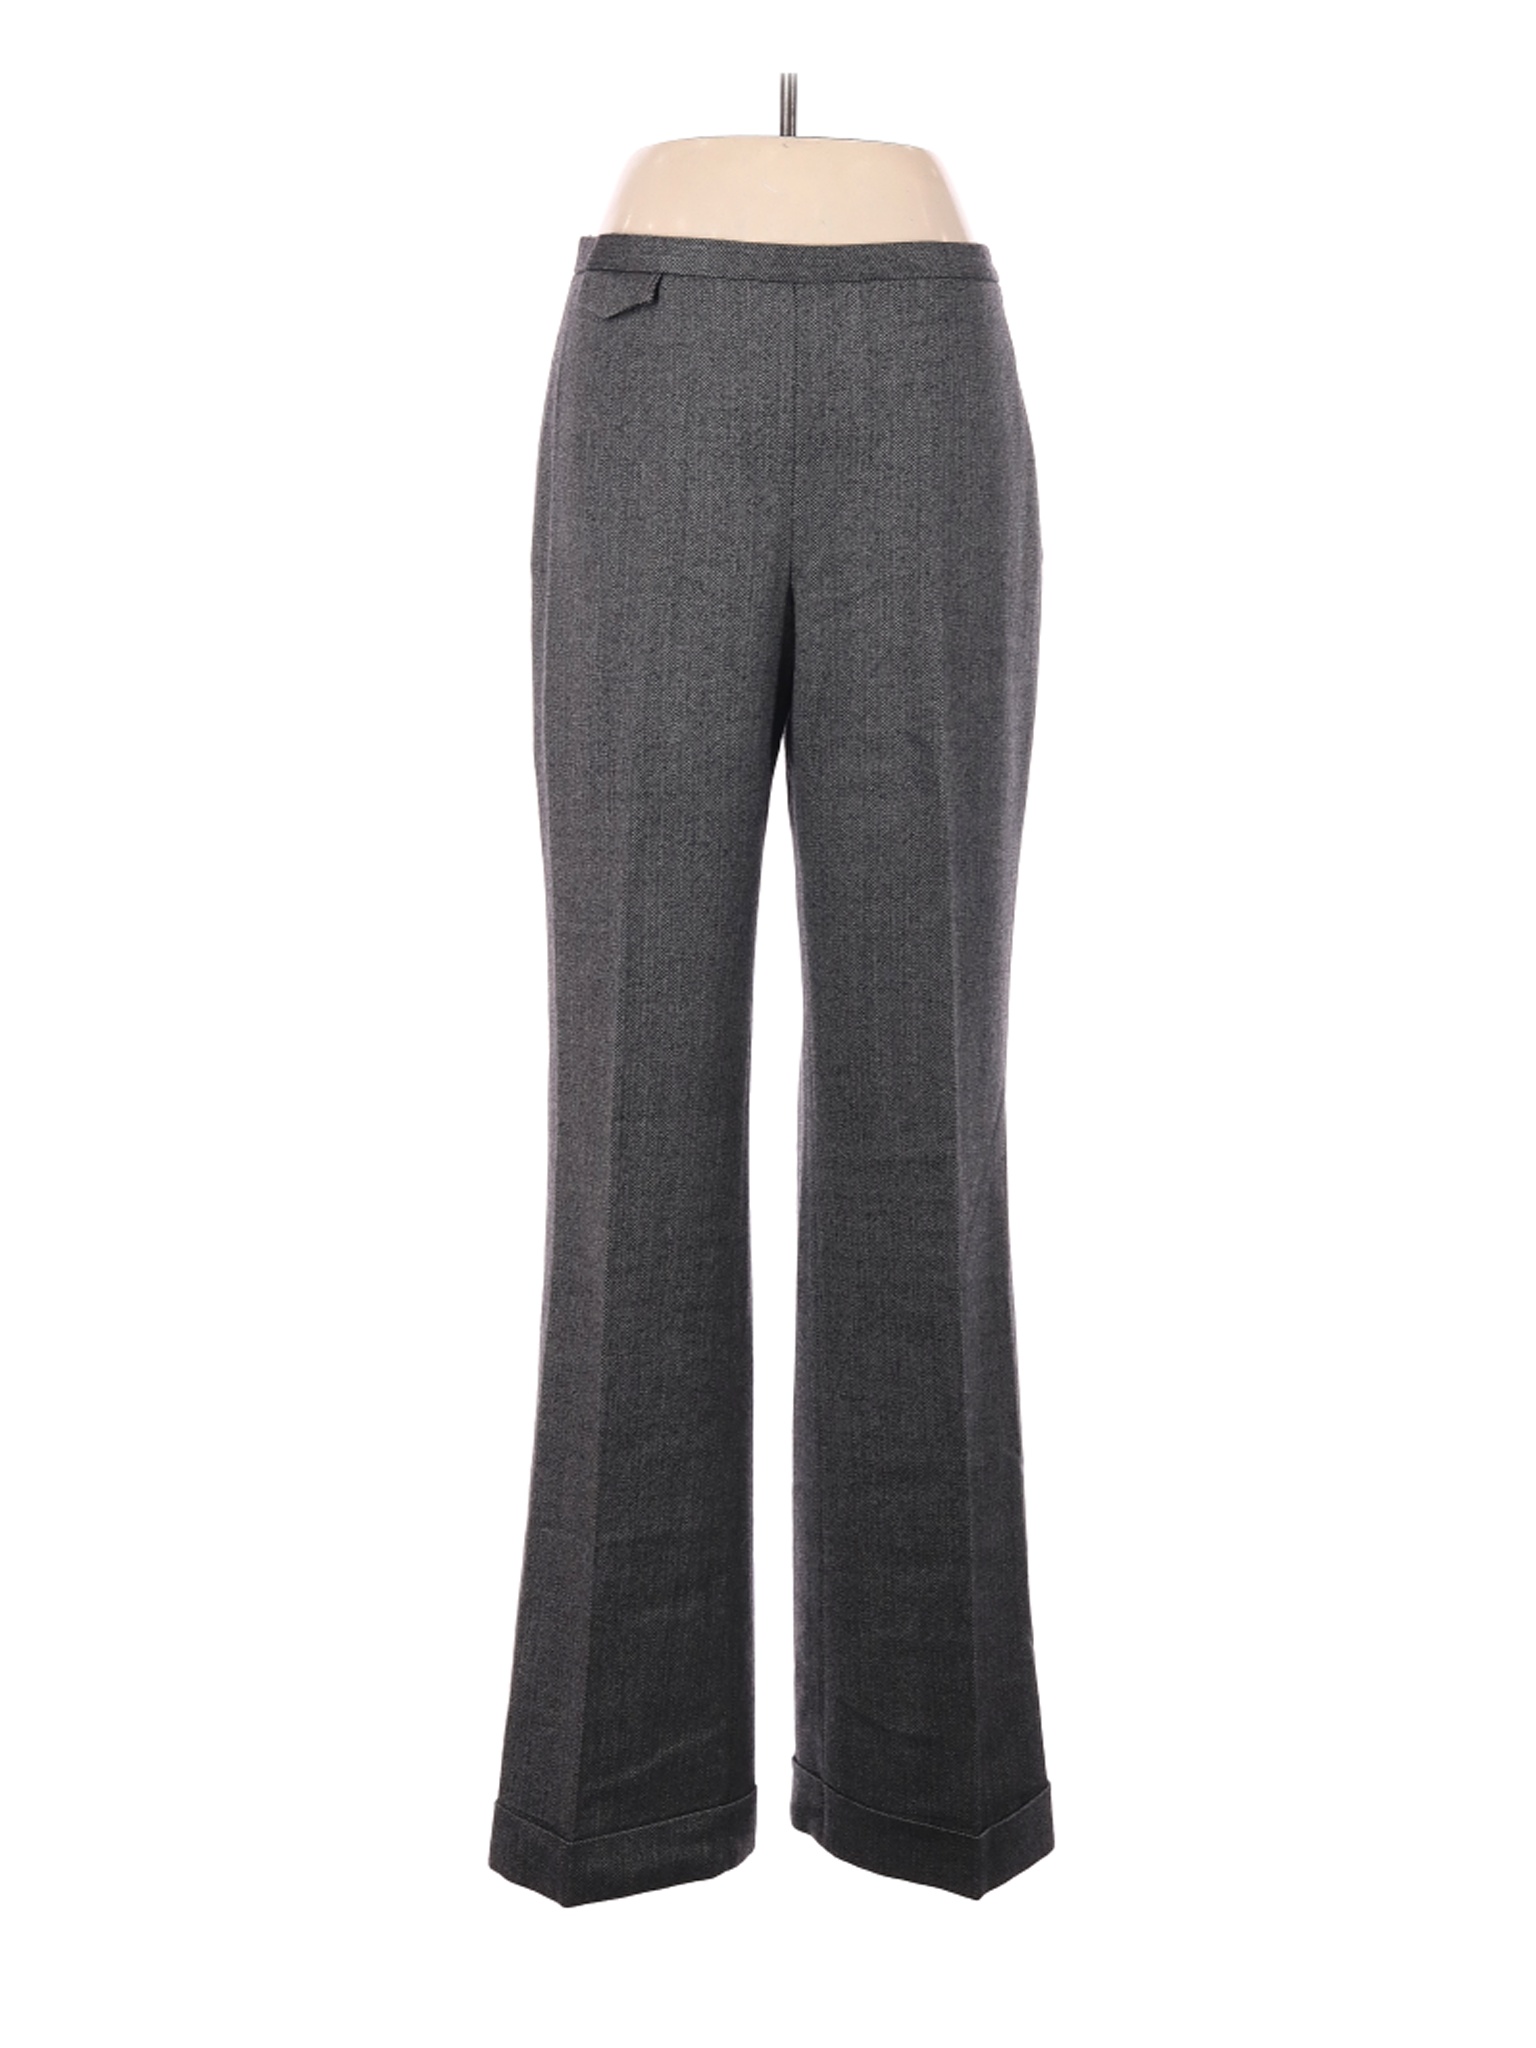 J.Crew Women Gray Wool Pants 12 | eBay